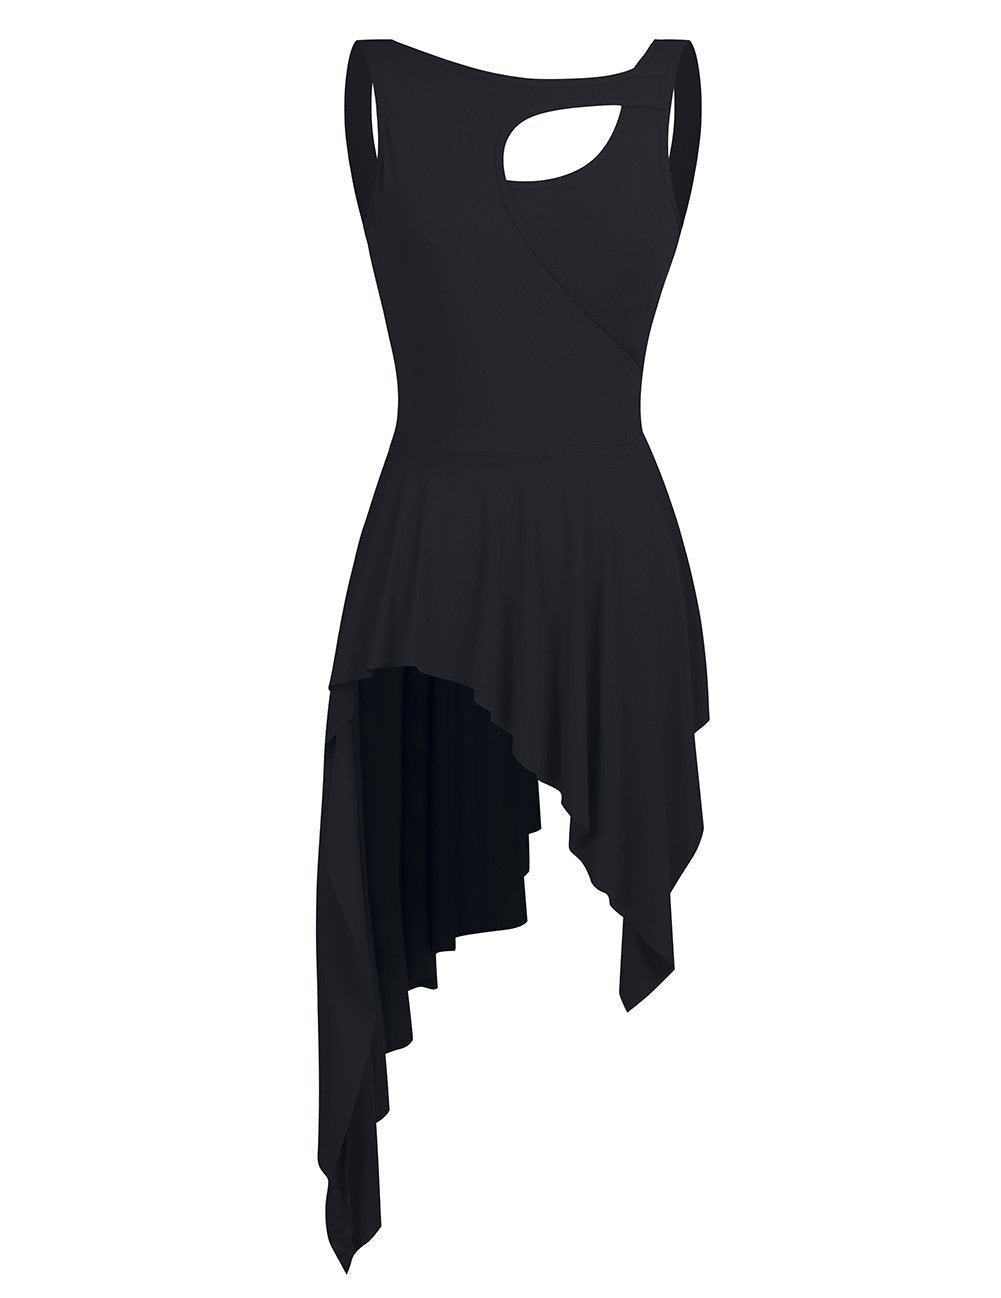 [AUSTRALIA] - inhzoy Women's Lyrical Sleeveless High Low Ballet Dance Dress Stage Performance Costumes Black X-Large 